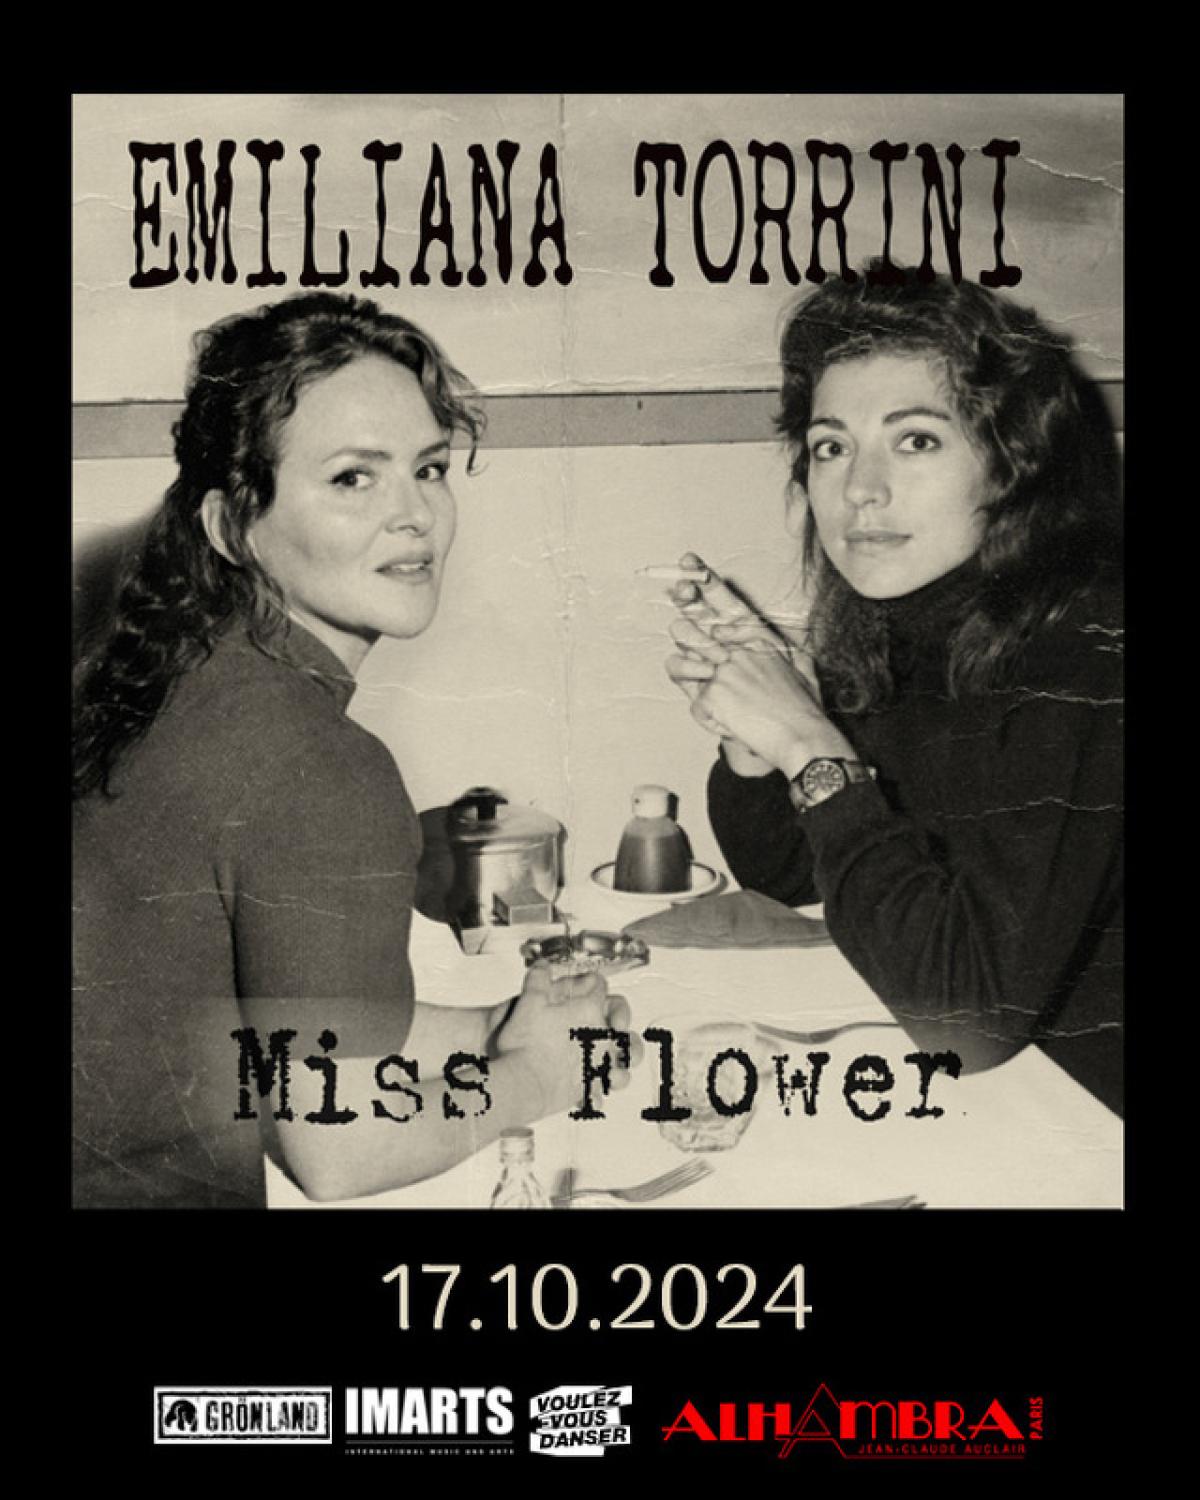 Emiliana Torrini at Alhambra Tickets